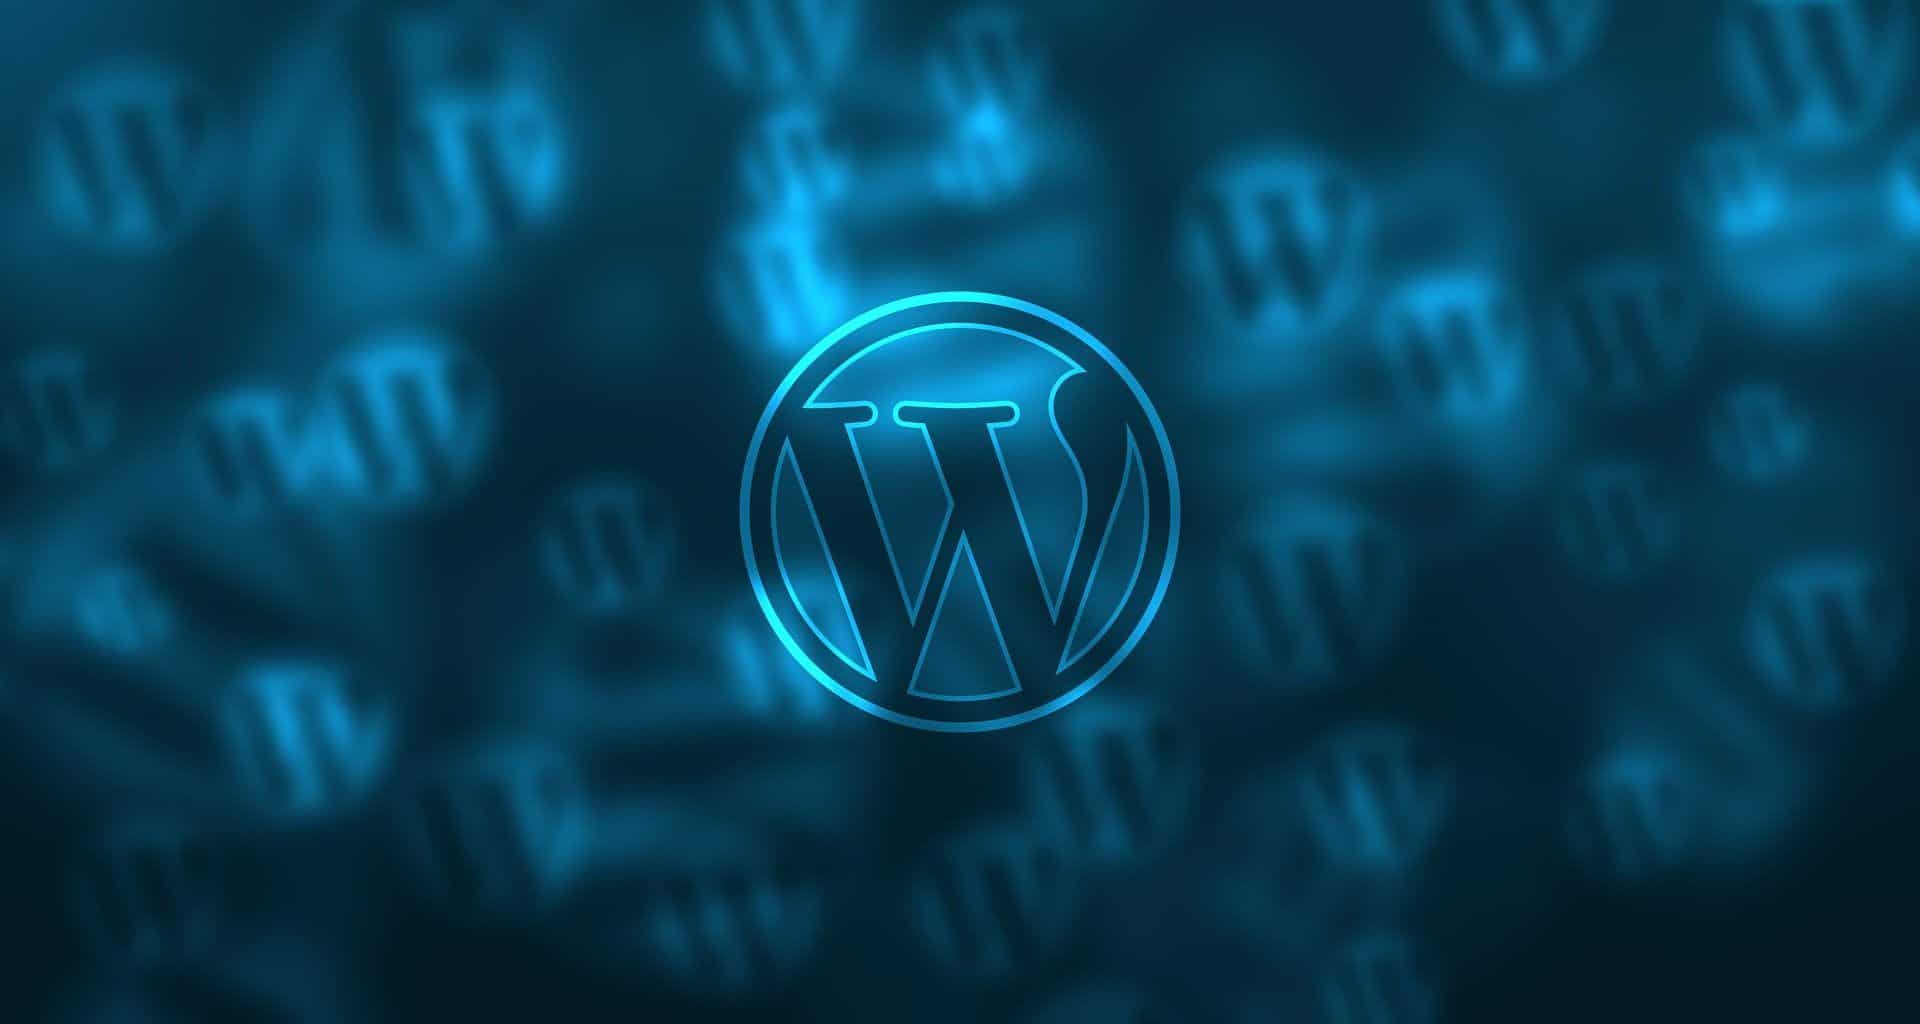 Build Funnels and Websites in WordPress